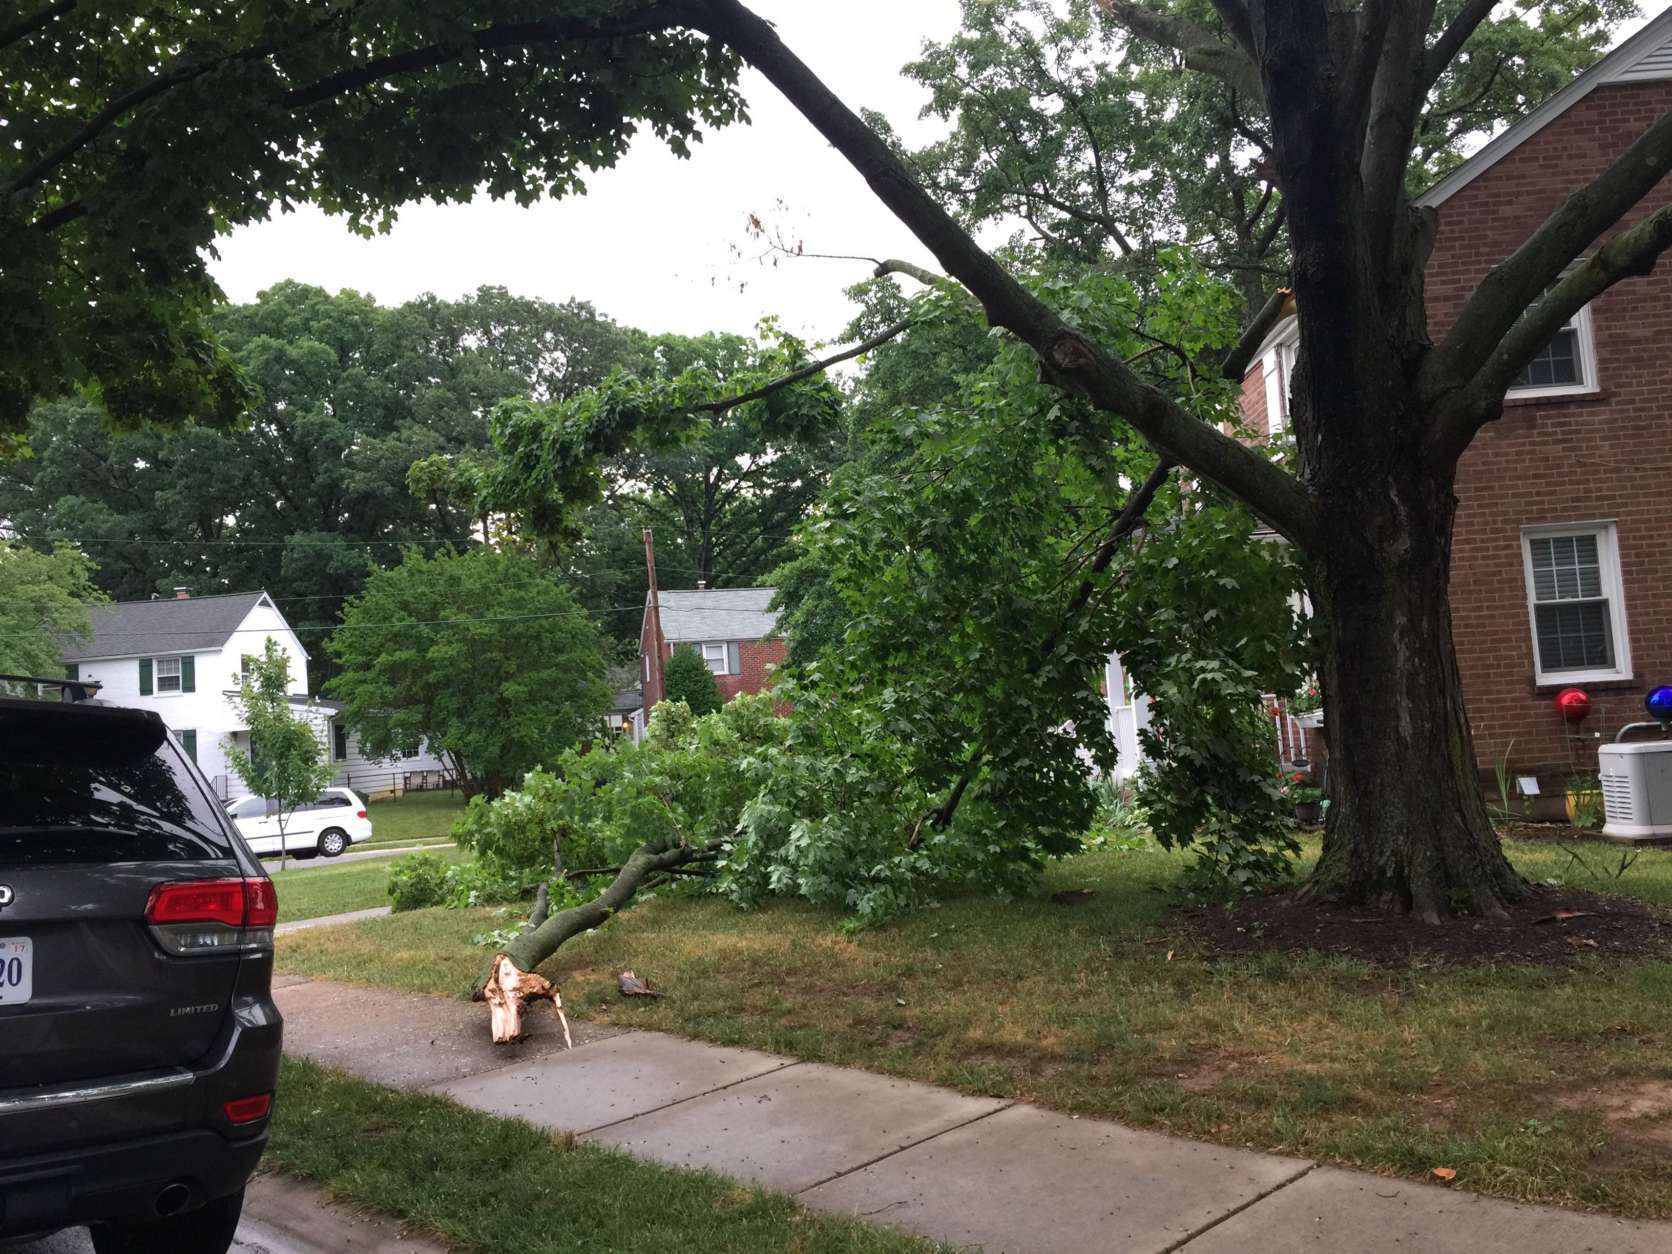 Storm damage in Arlington Forest neighborhood in Virginia. (Courtesy Liz Vance)